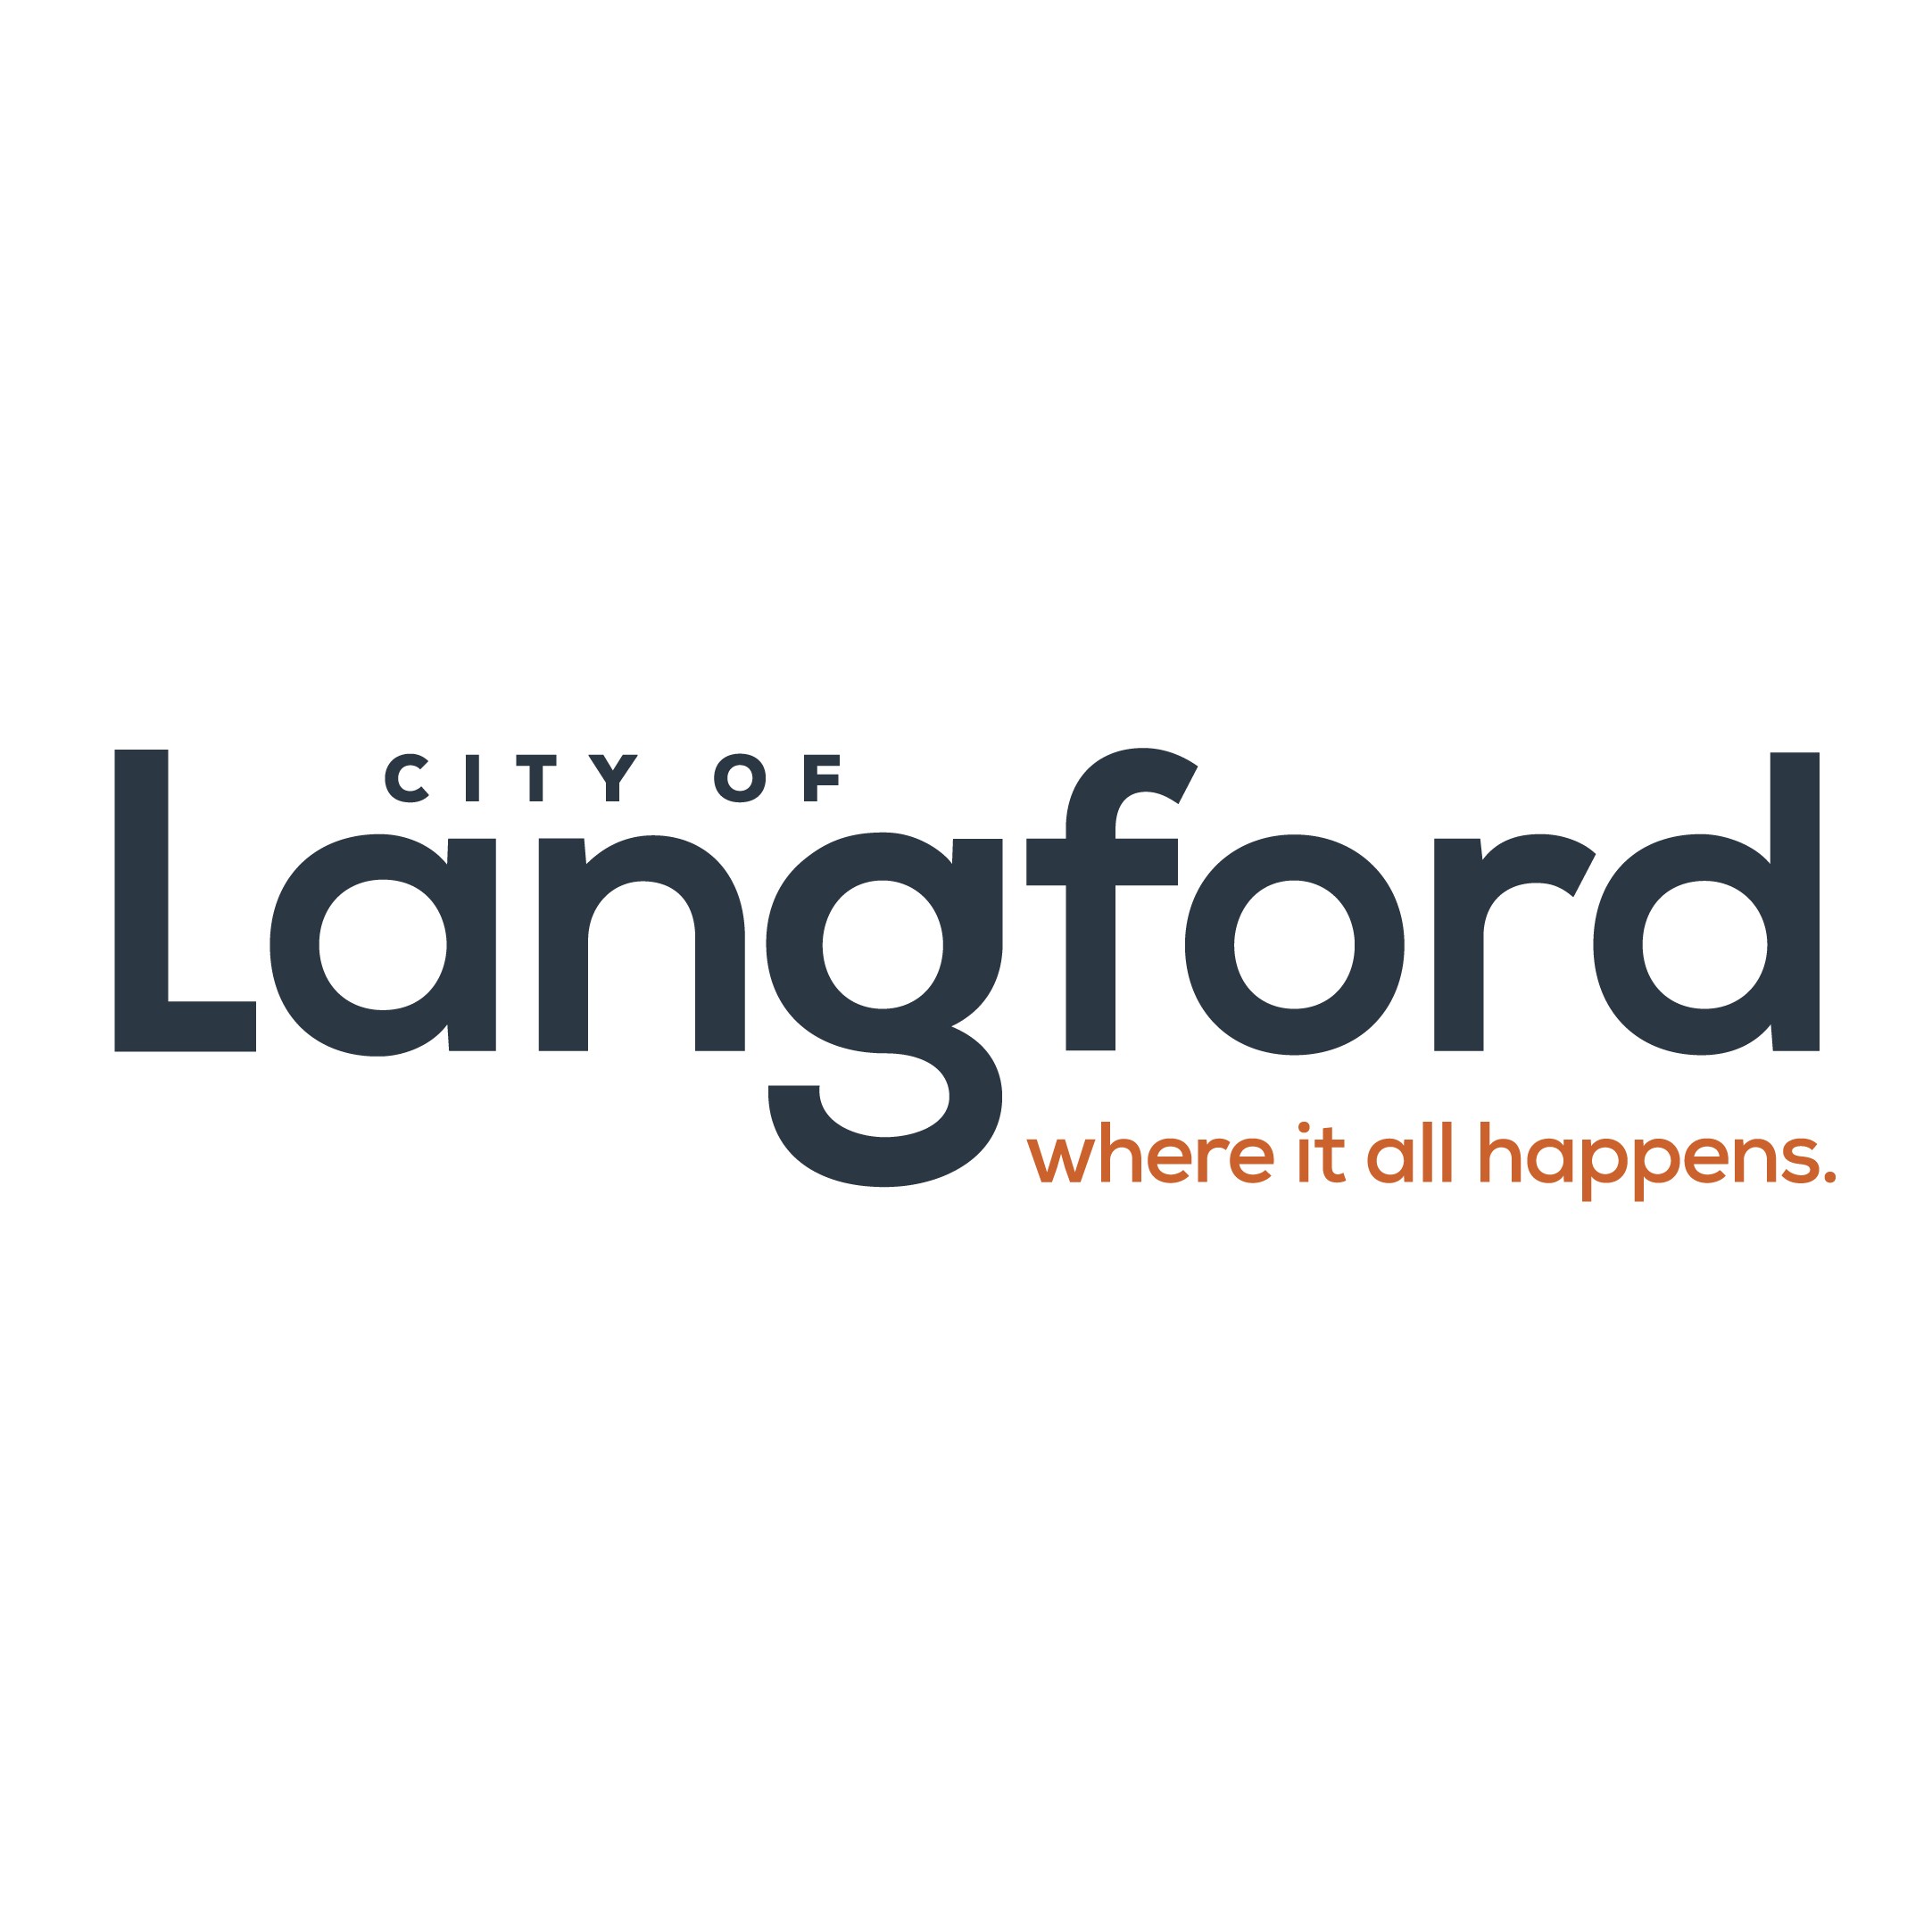 City of Langford's logo